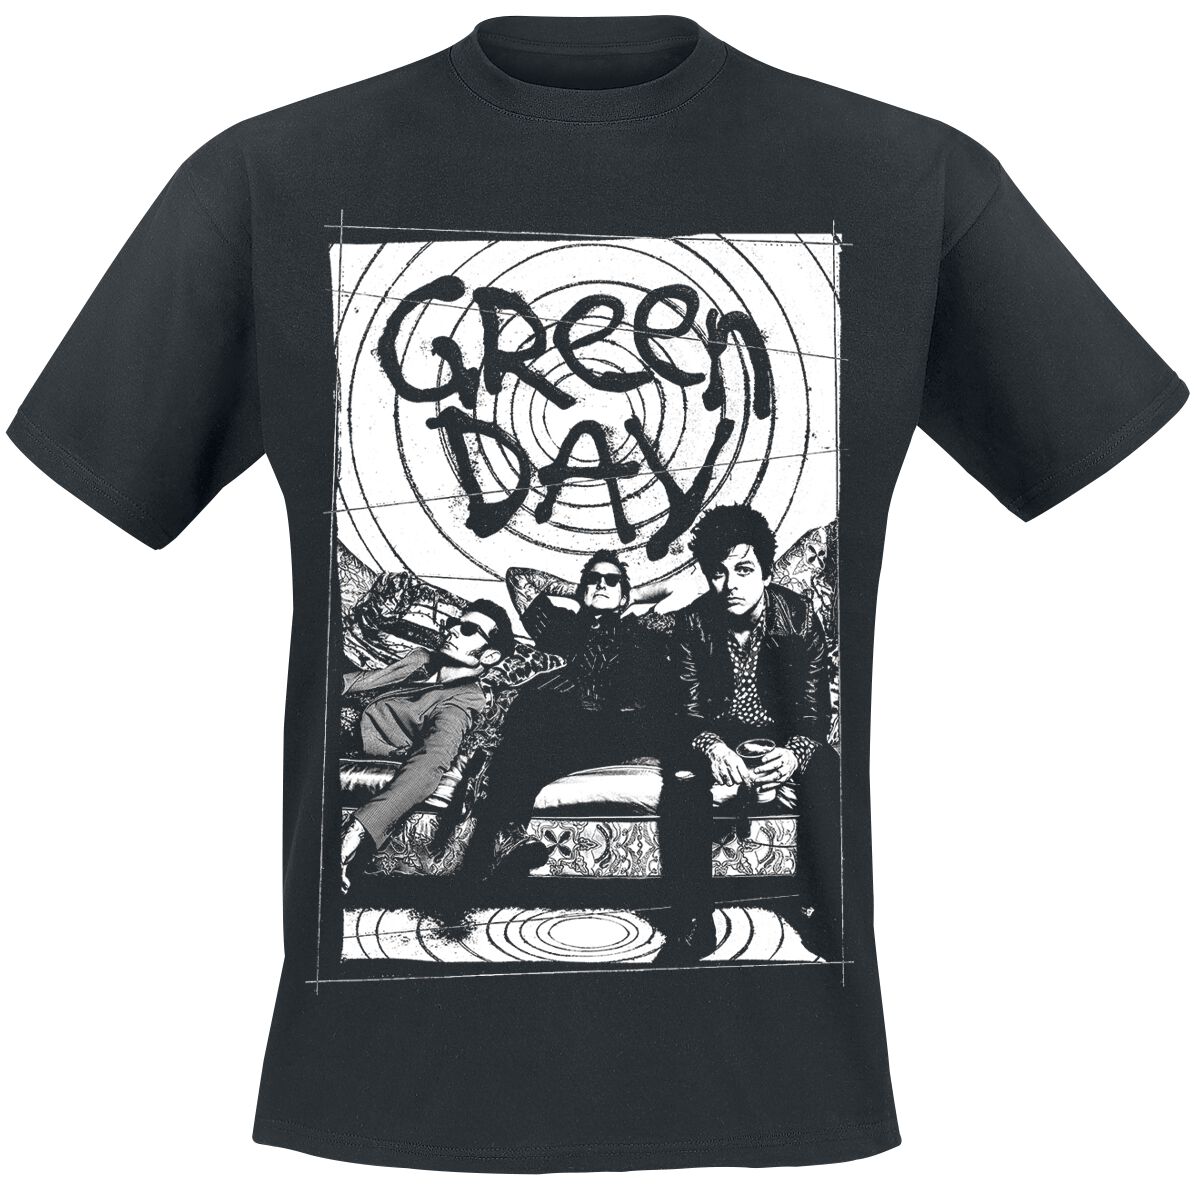 Green Day t shirt 